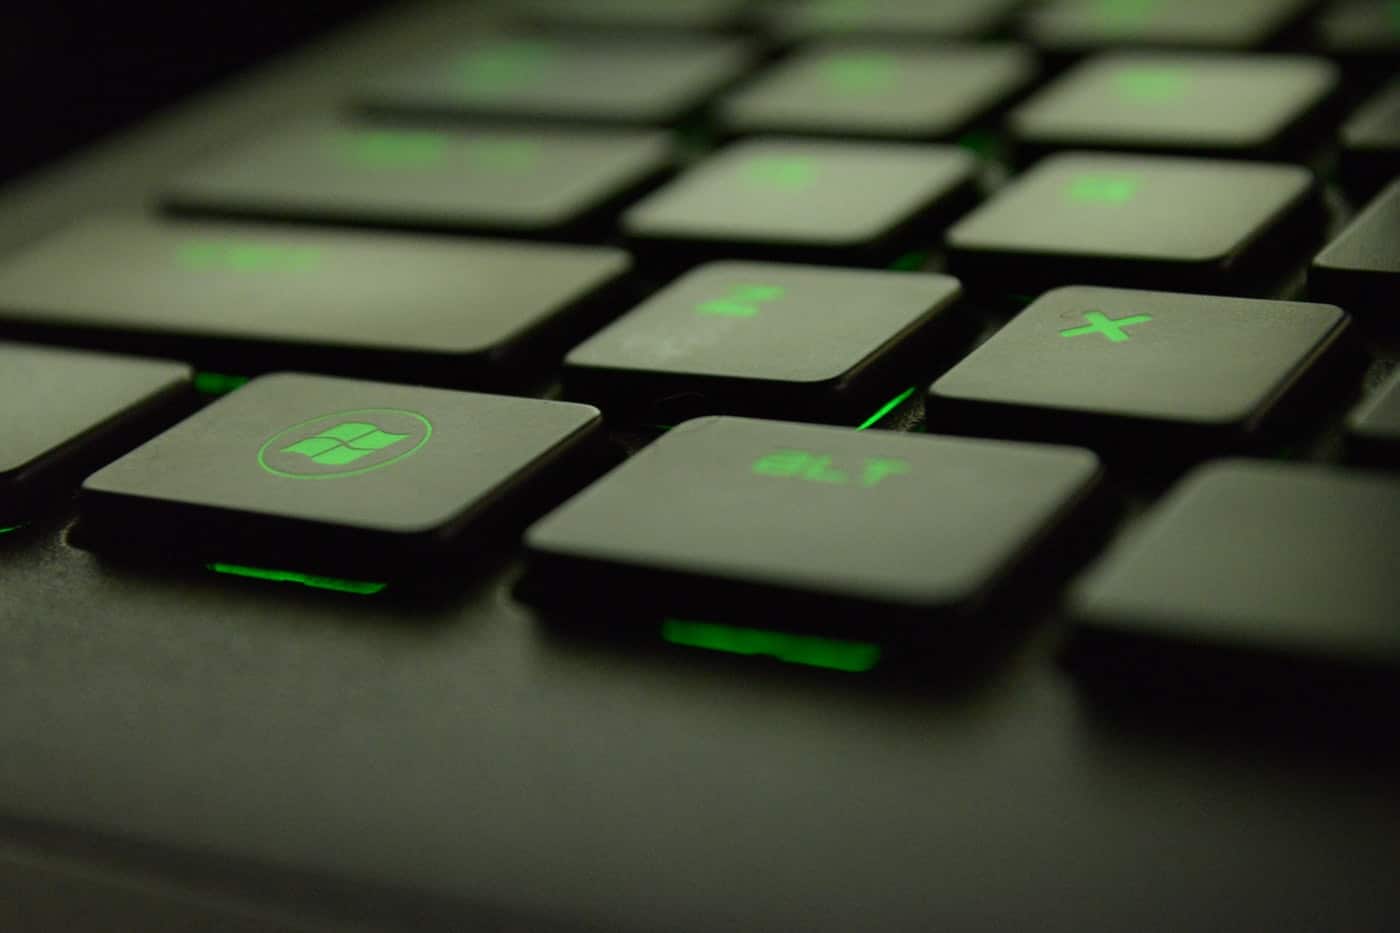 Windows Button on a Backlit Green Keyboard